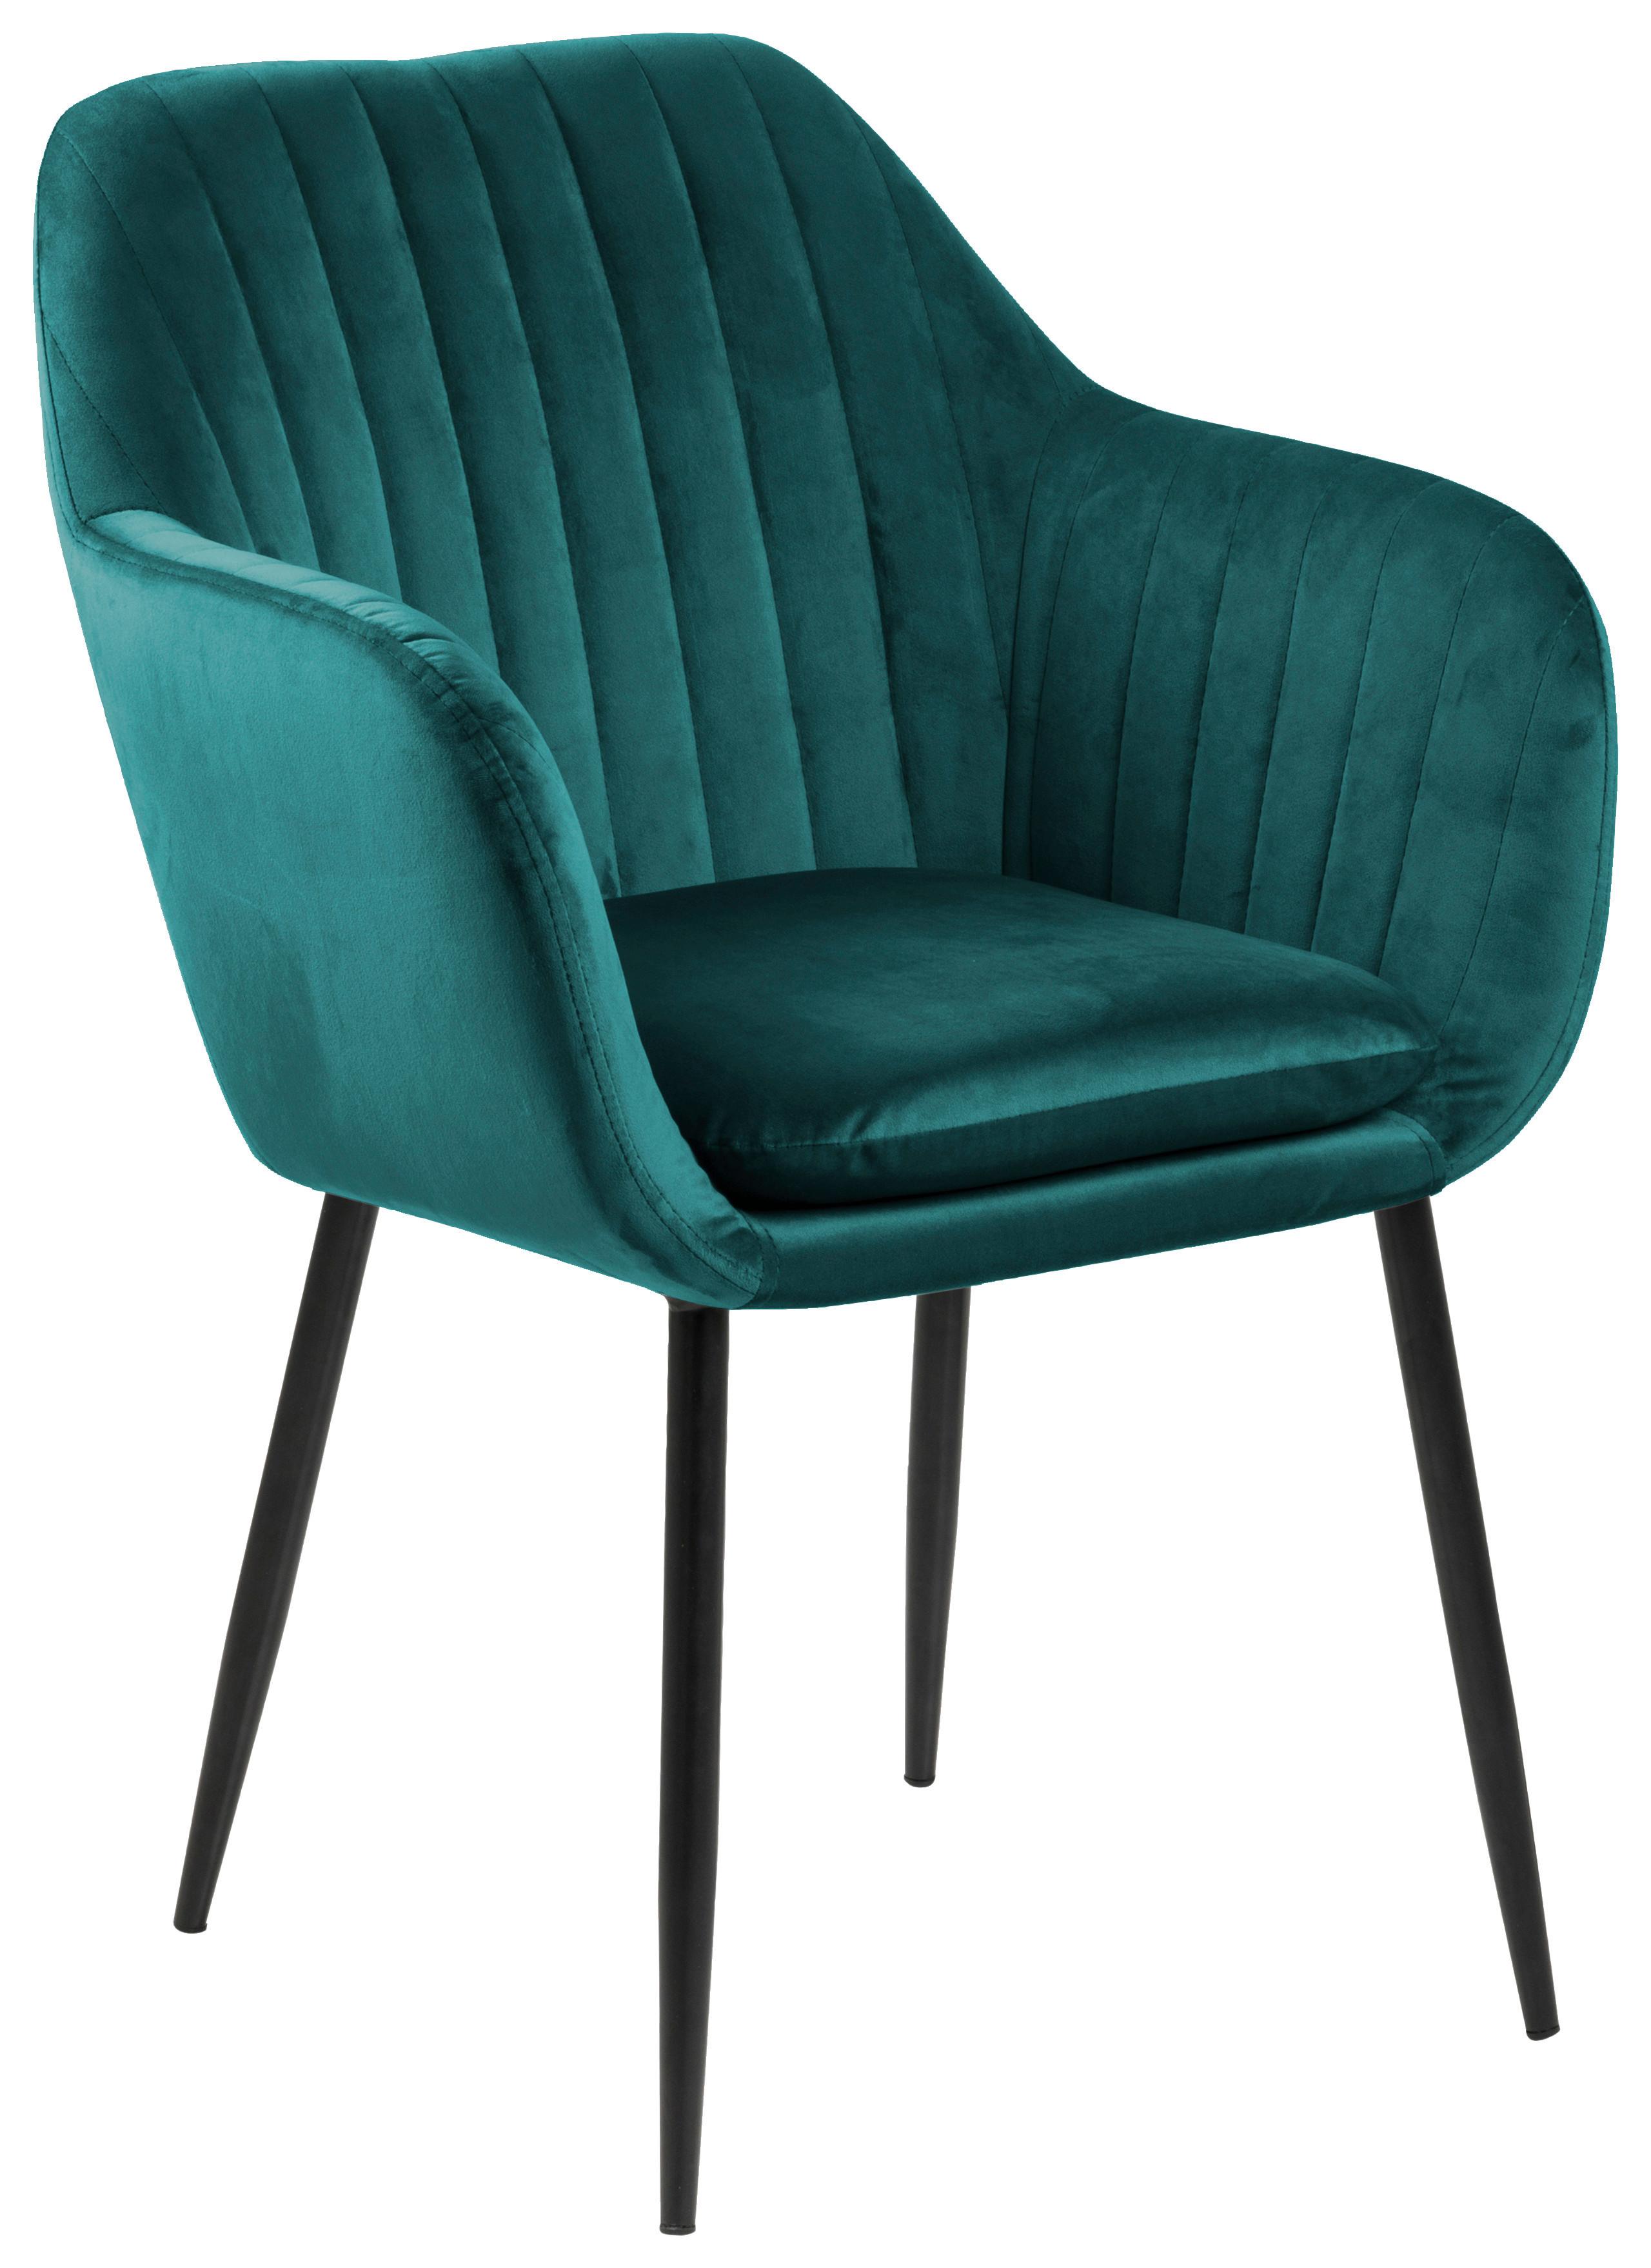 Židle S Područkami Emilia Zelená - černá/tmavě zelená, Trend, kov/textil (57/83/59cm) - Ambia Home